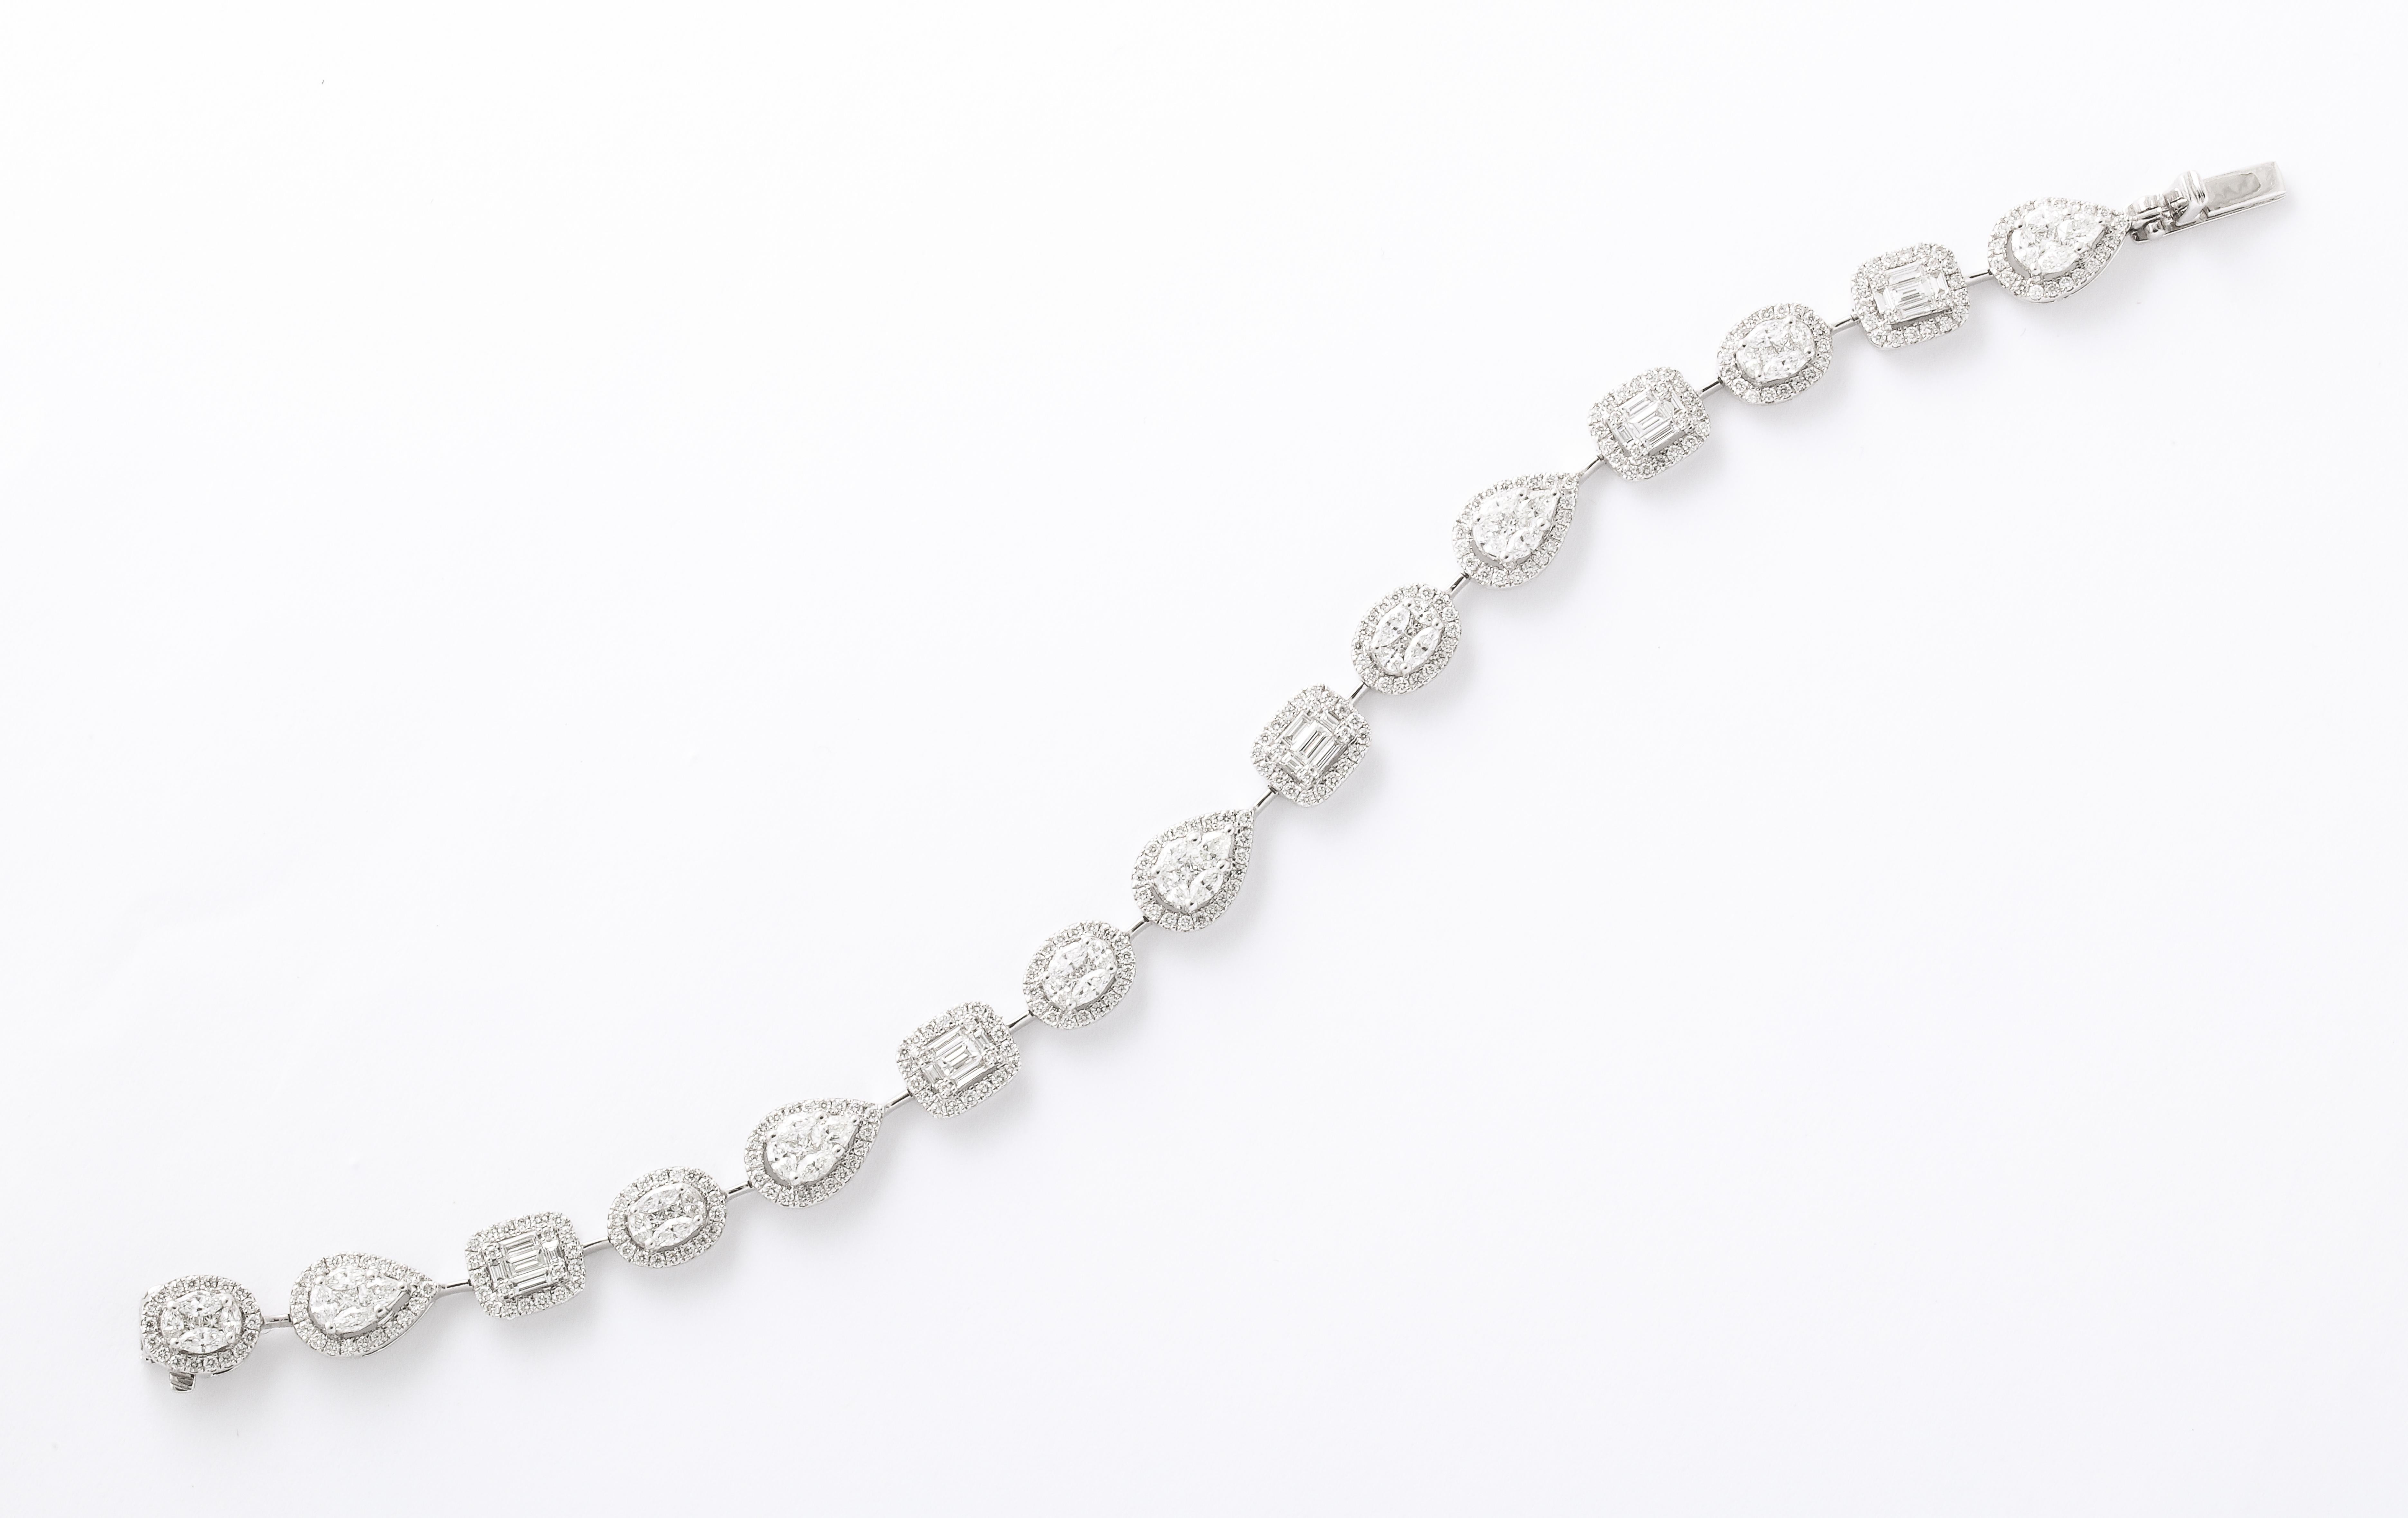 A beautiful multi shape bracelet made of illusion set diamonds. 

5.15 carats of white diamonds.

18k white gold 

6.75 inch length. 